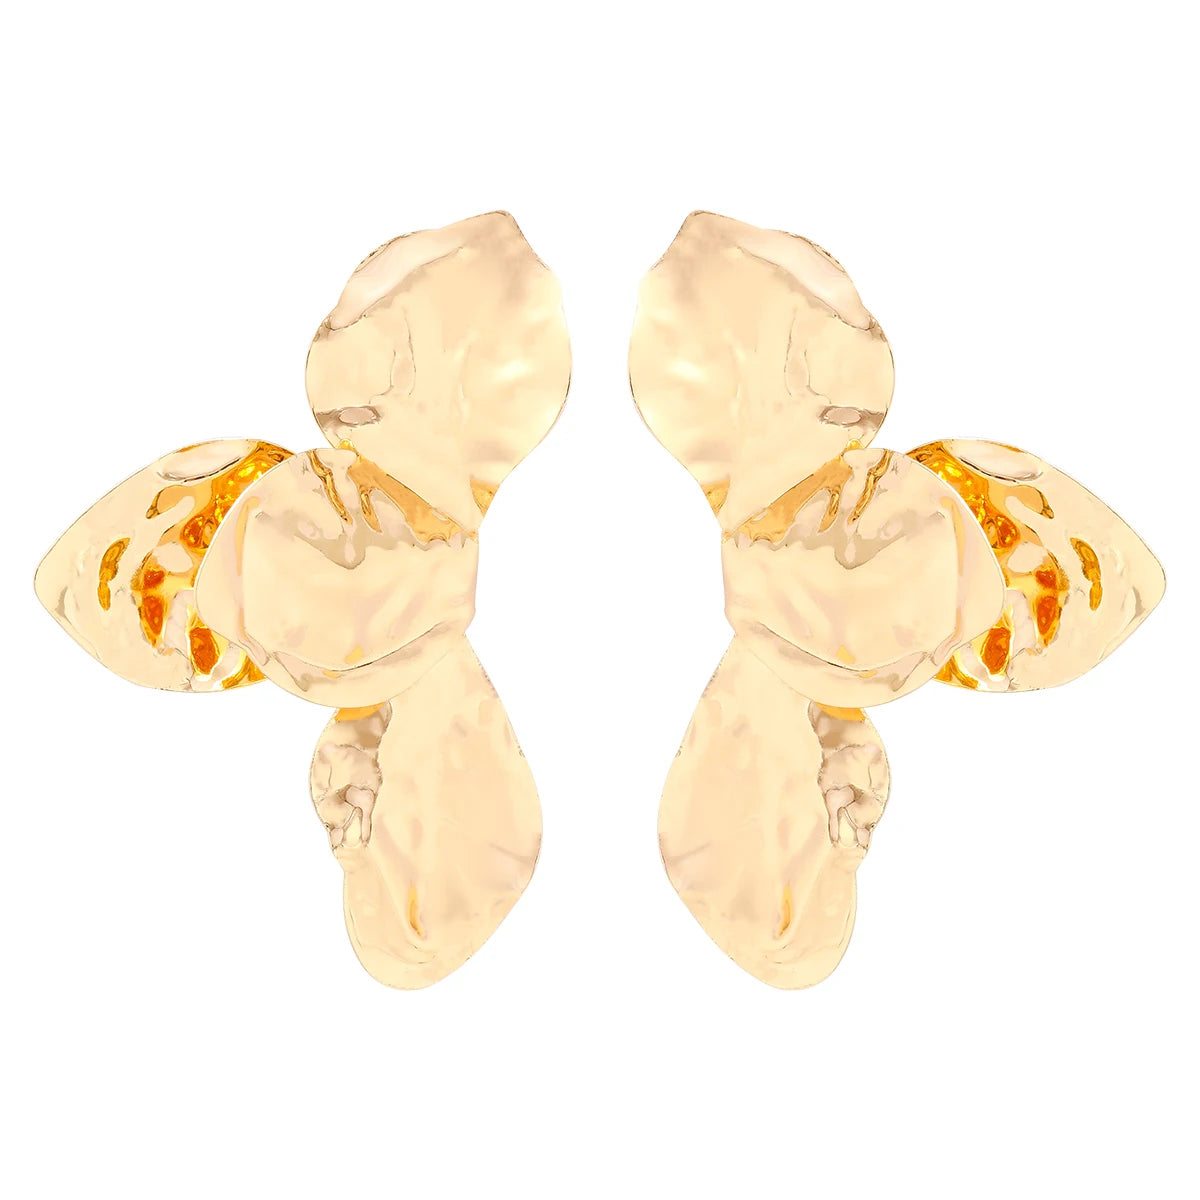 TEEK - Various Different Dame Earrings JEWELRY theteekdotcom 57428-GD  